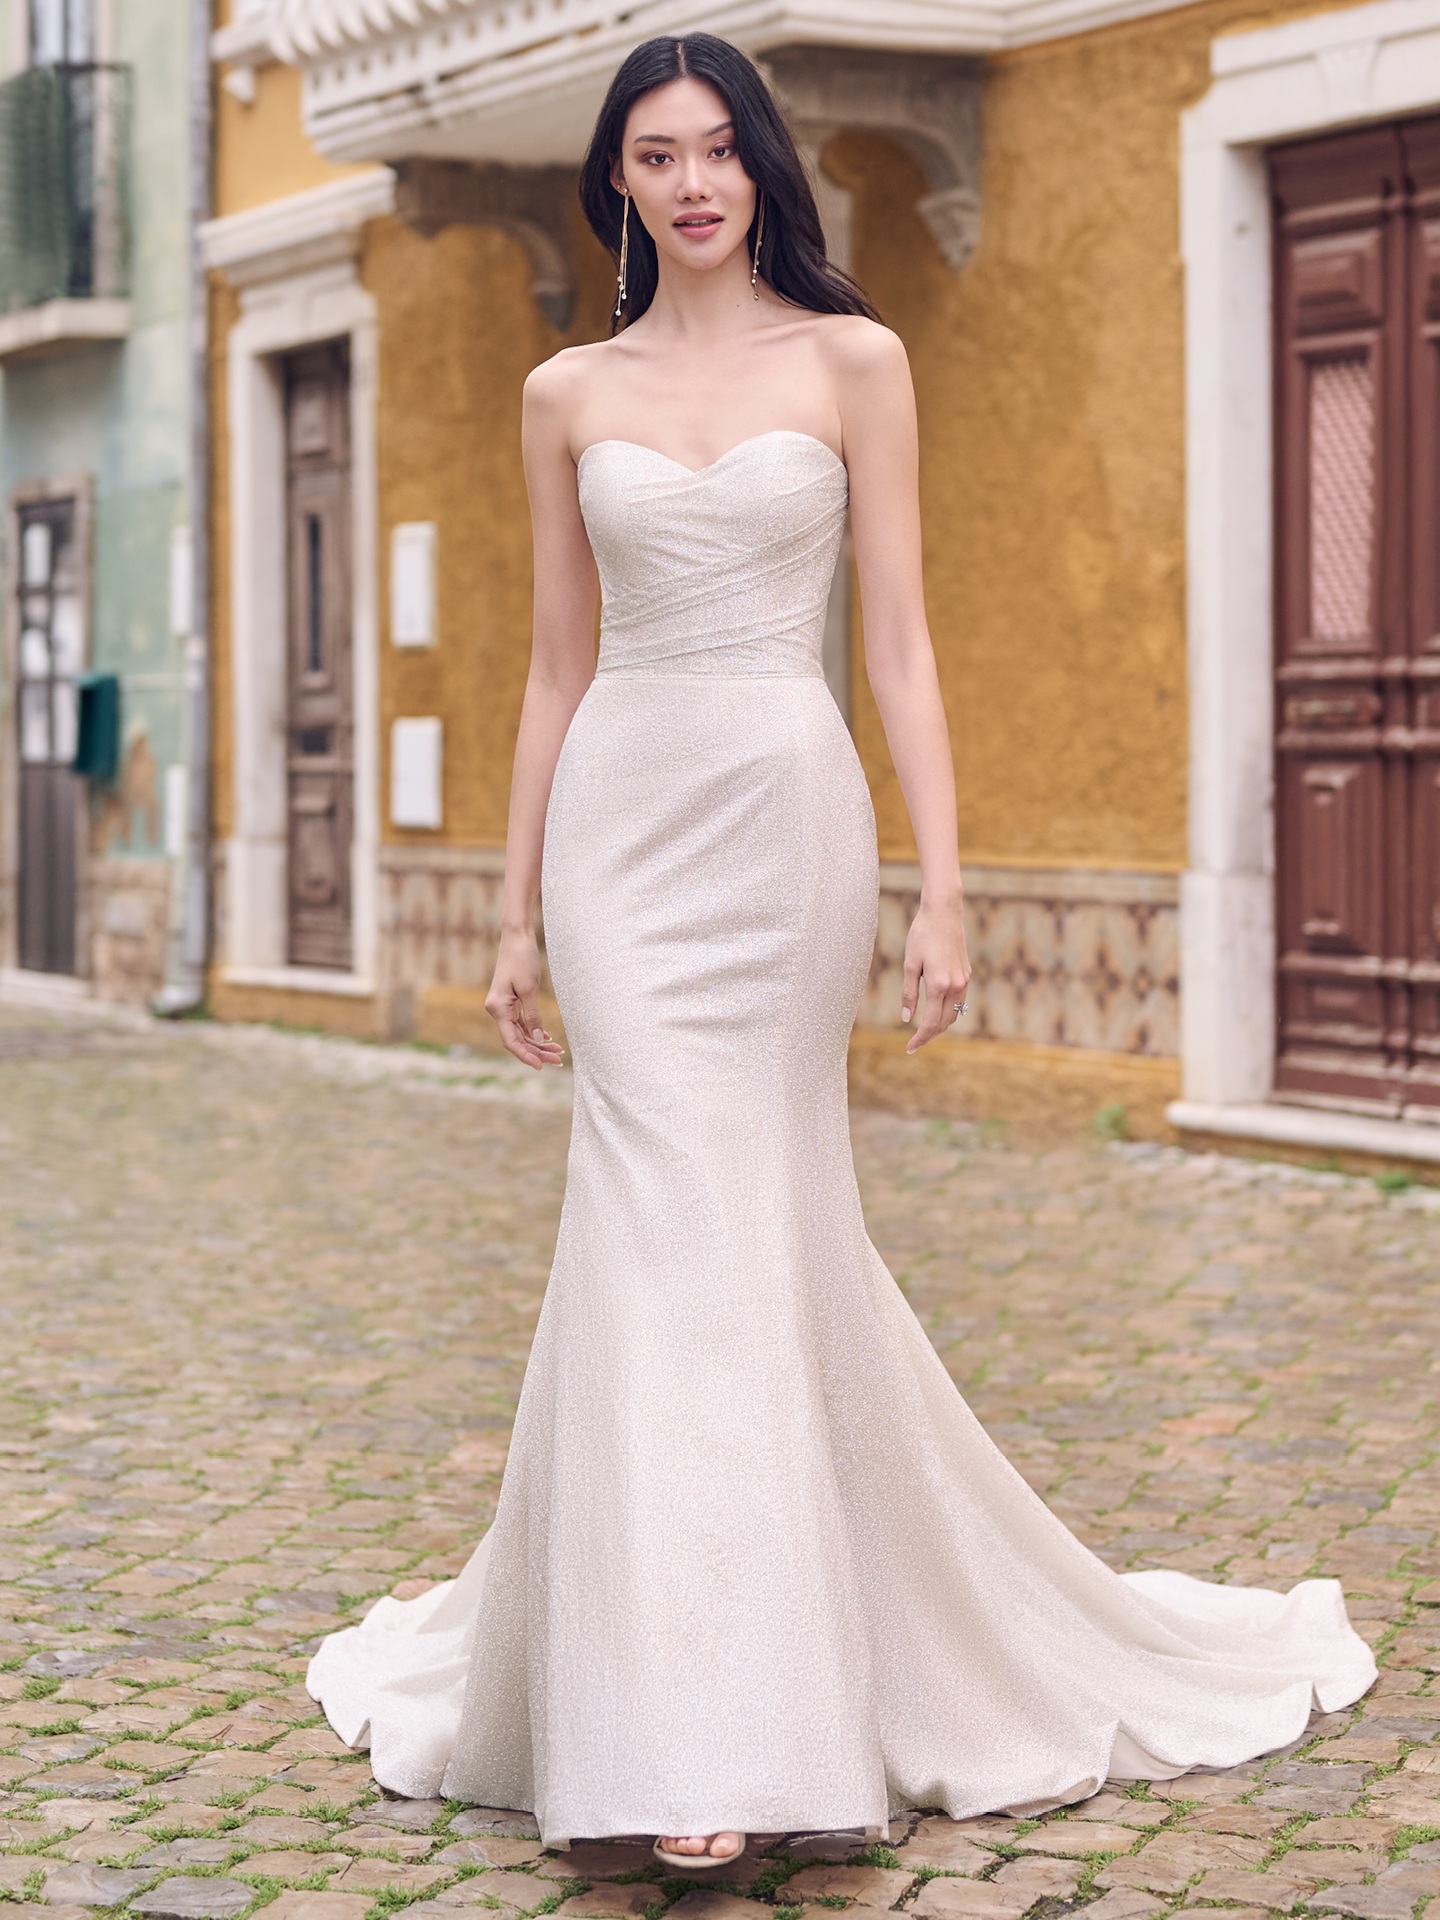 Romantic Tulle Off the Shoulder Wedding Dress  Sophia Tolli Gianna Y12243